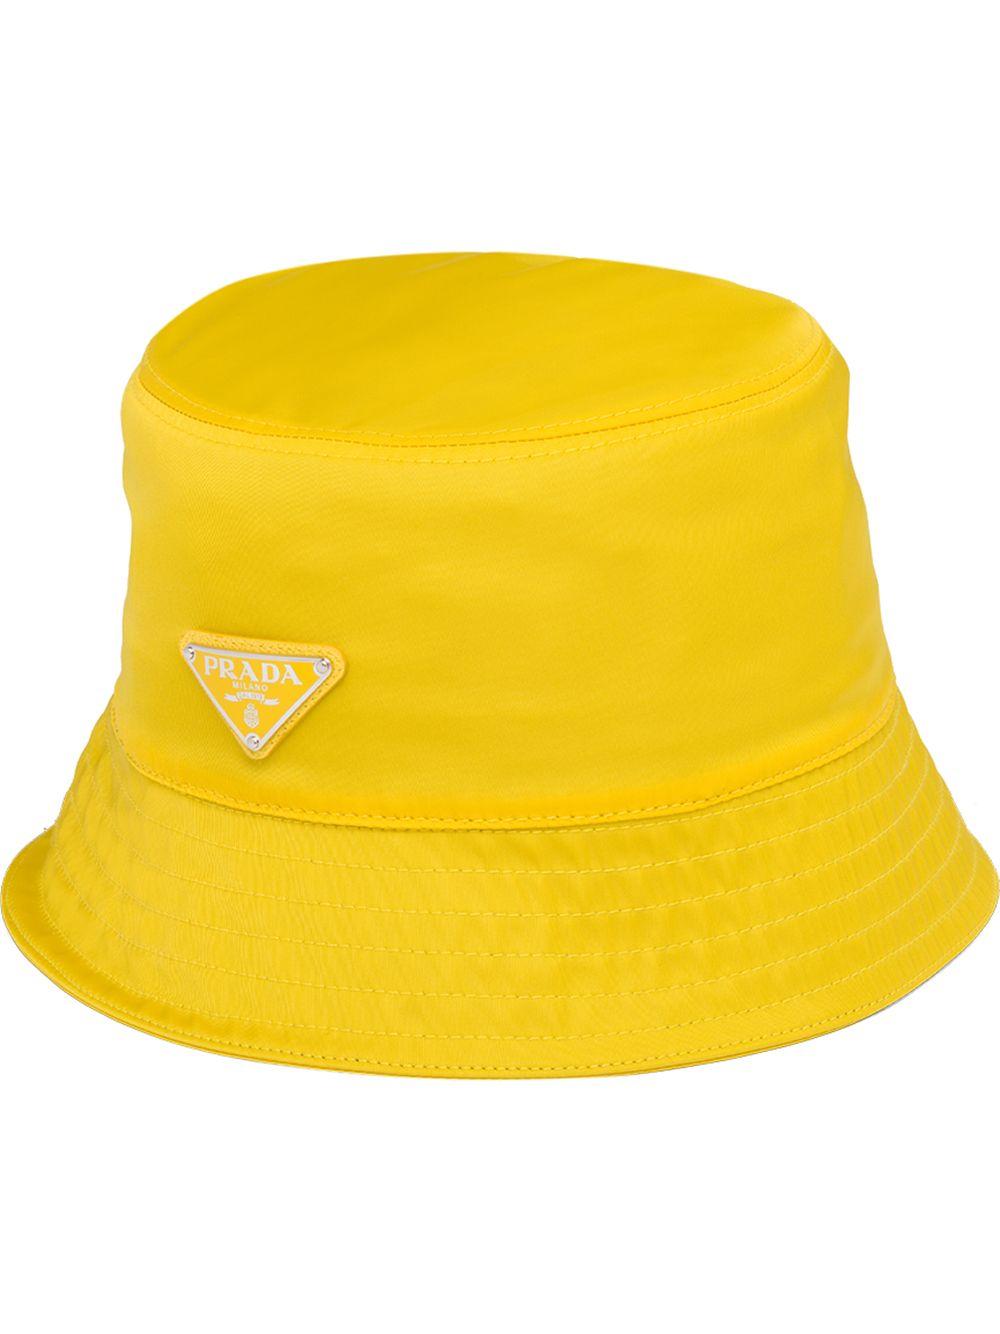 Prada Synthetic Logo Triangle Bucket Hat in Yellow - Lyst